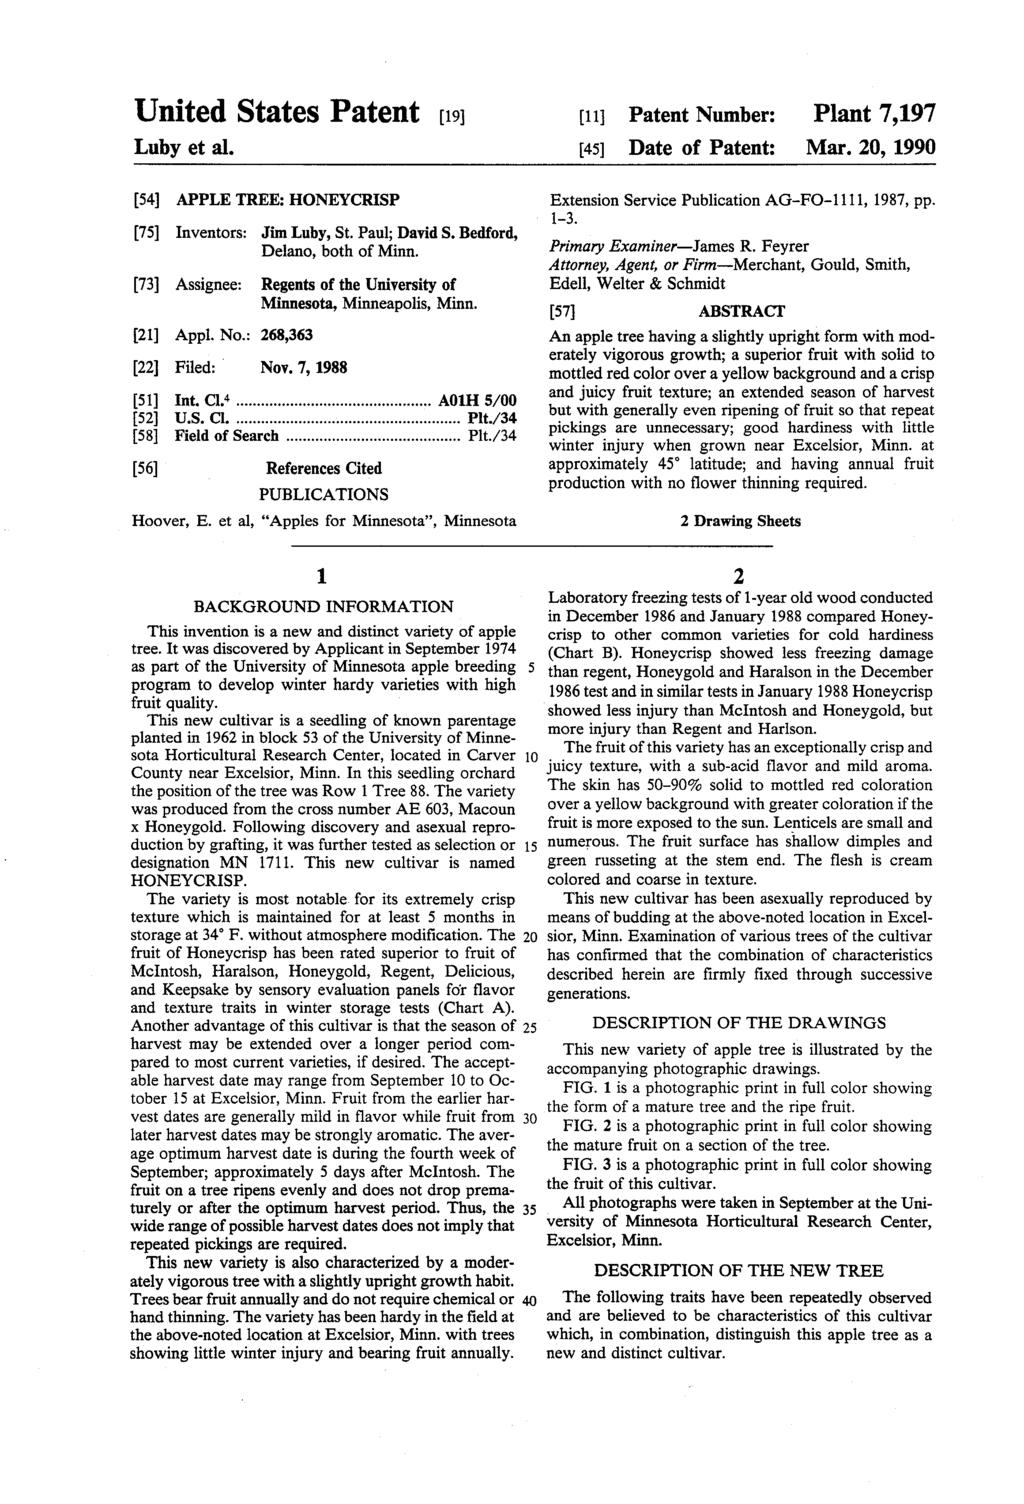 United States Patent (19) Luby et al. 11 45) Patent Number: Date of Patent: Plant 7,197 Mar. 20, 1990 54 APPLE TREE: HONEYCRISP 75 Inventors: Jim Luby, St. Paul; David S.